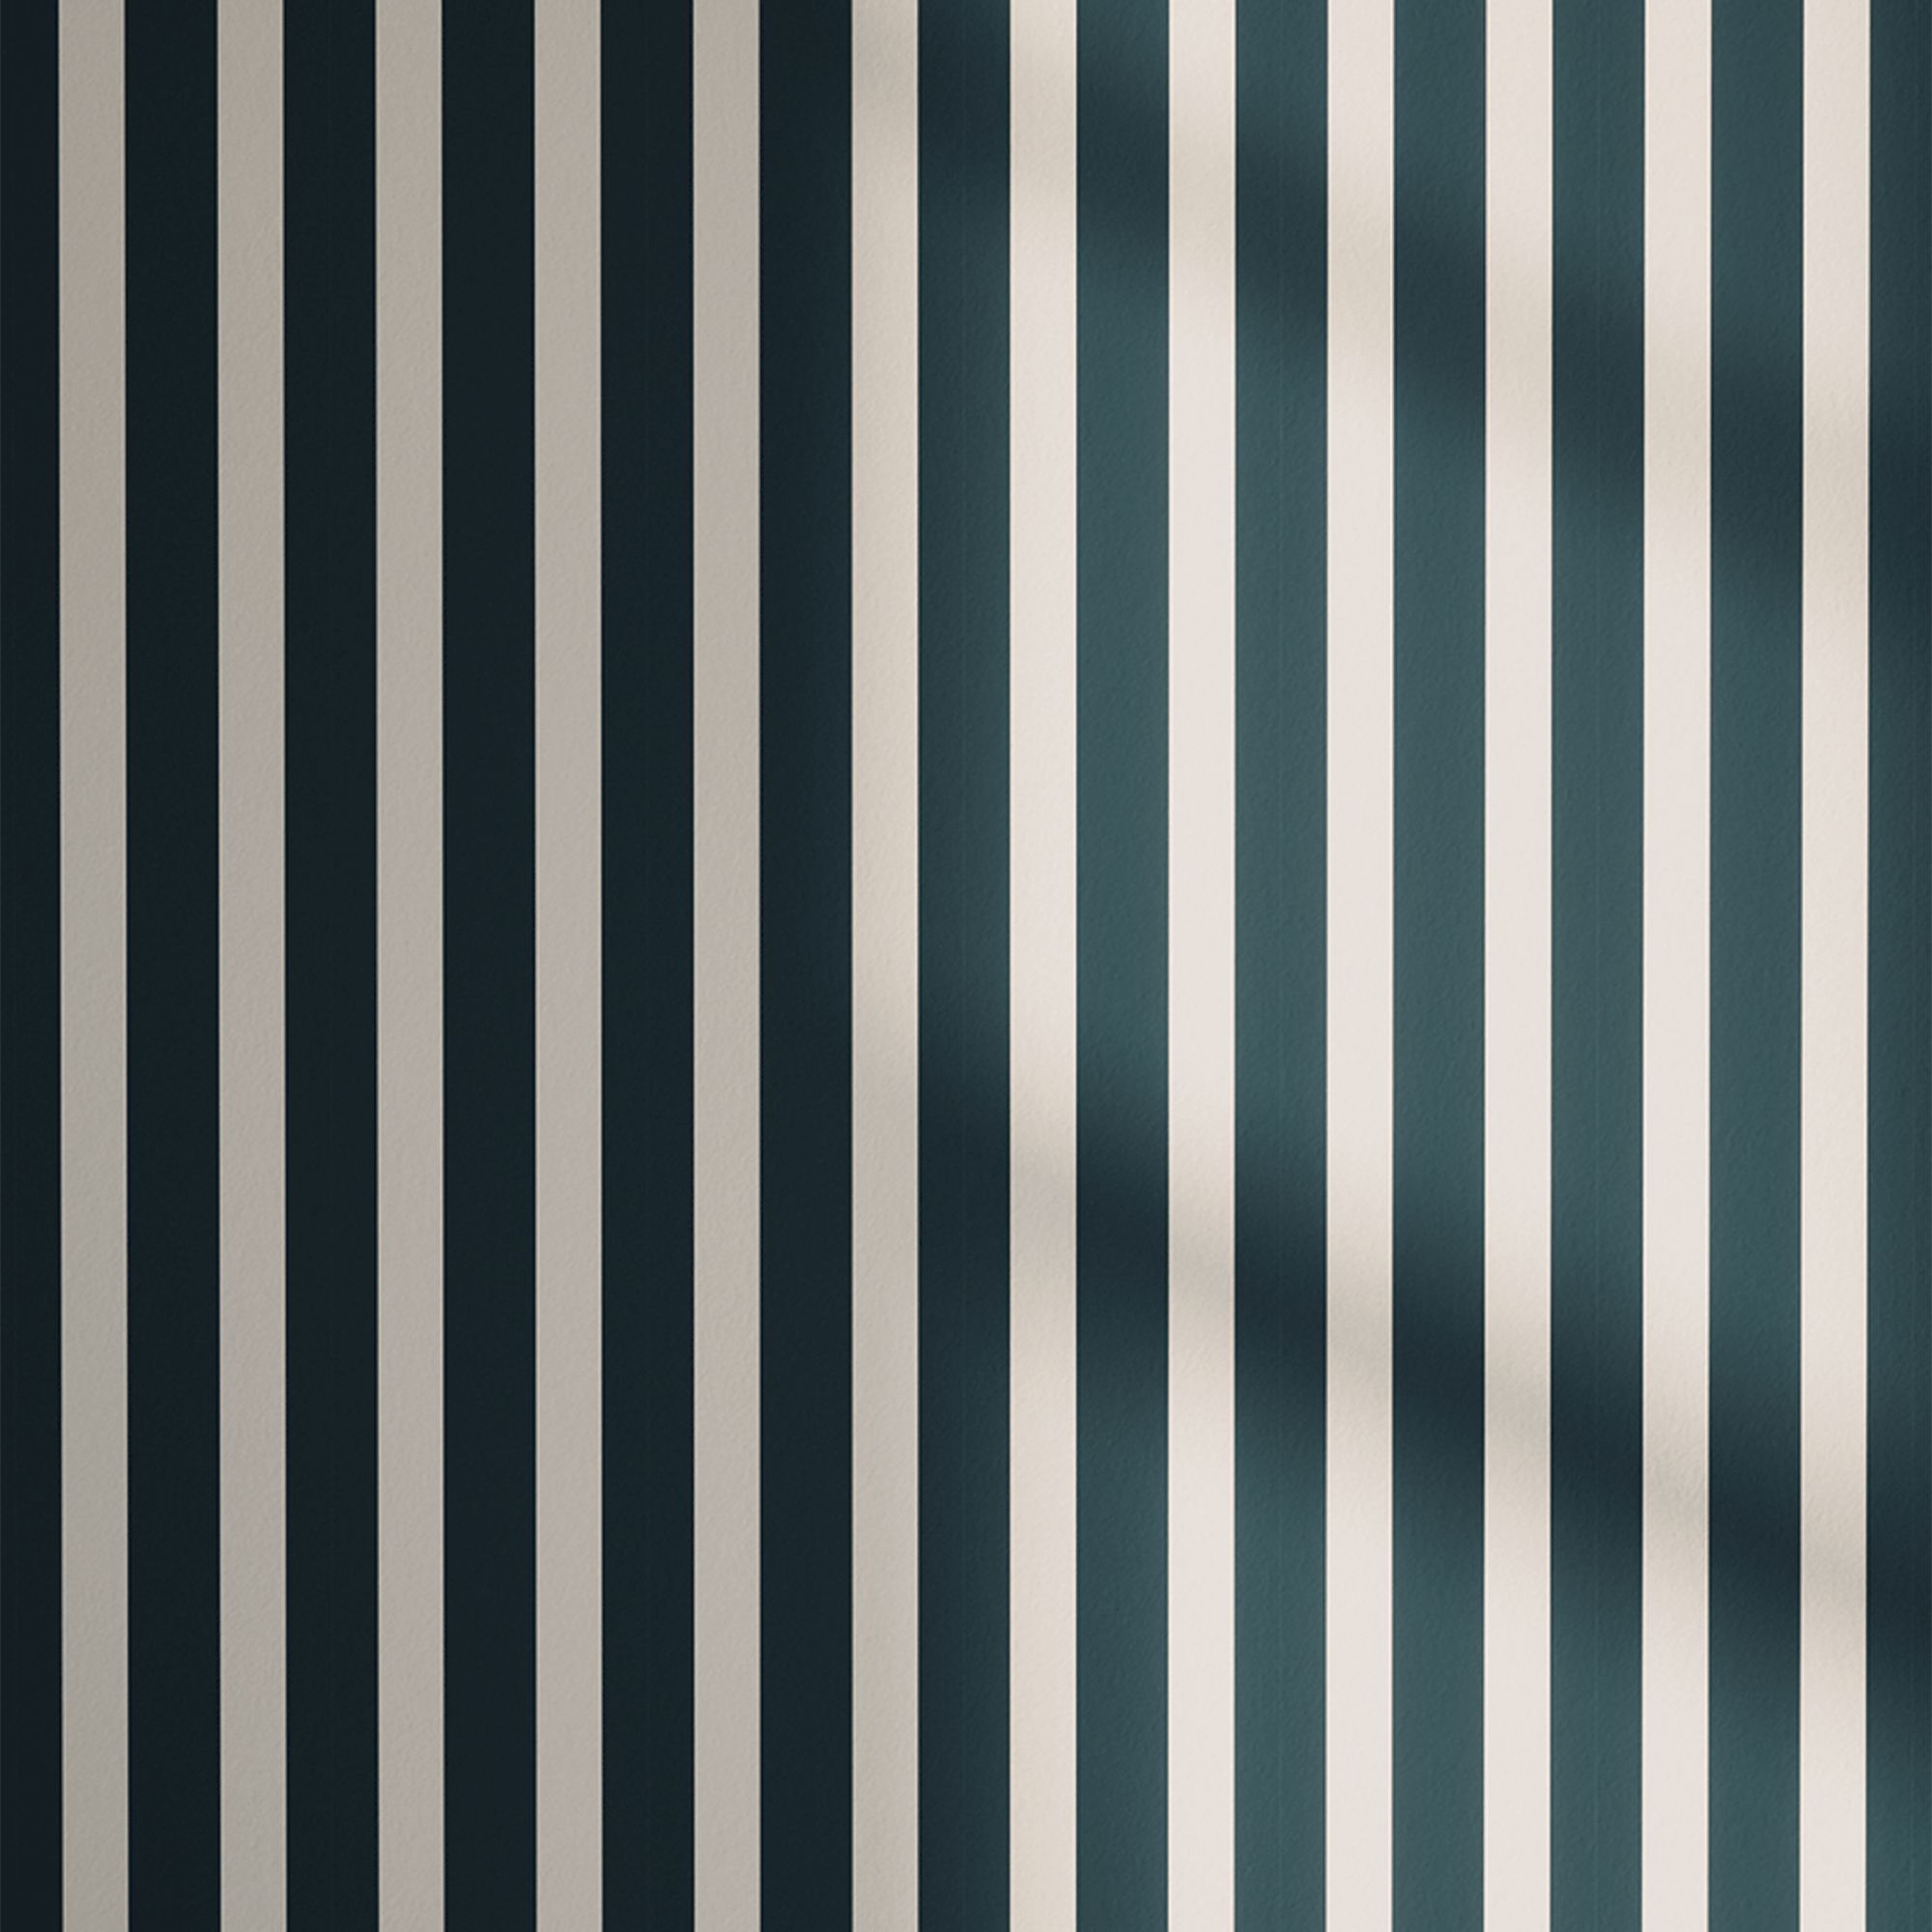 Lick Blue & Grey Stripes 02 Textured Wallpaper Sample